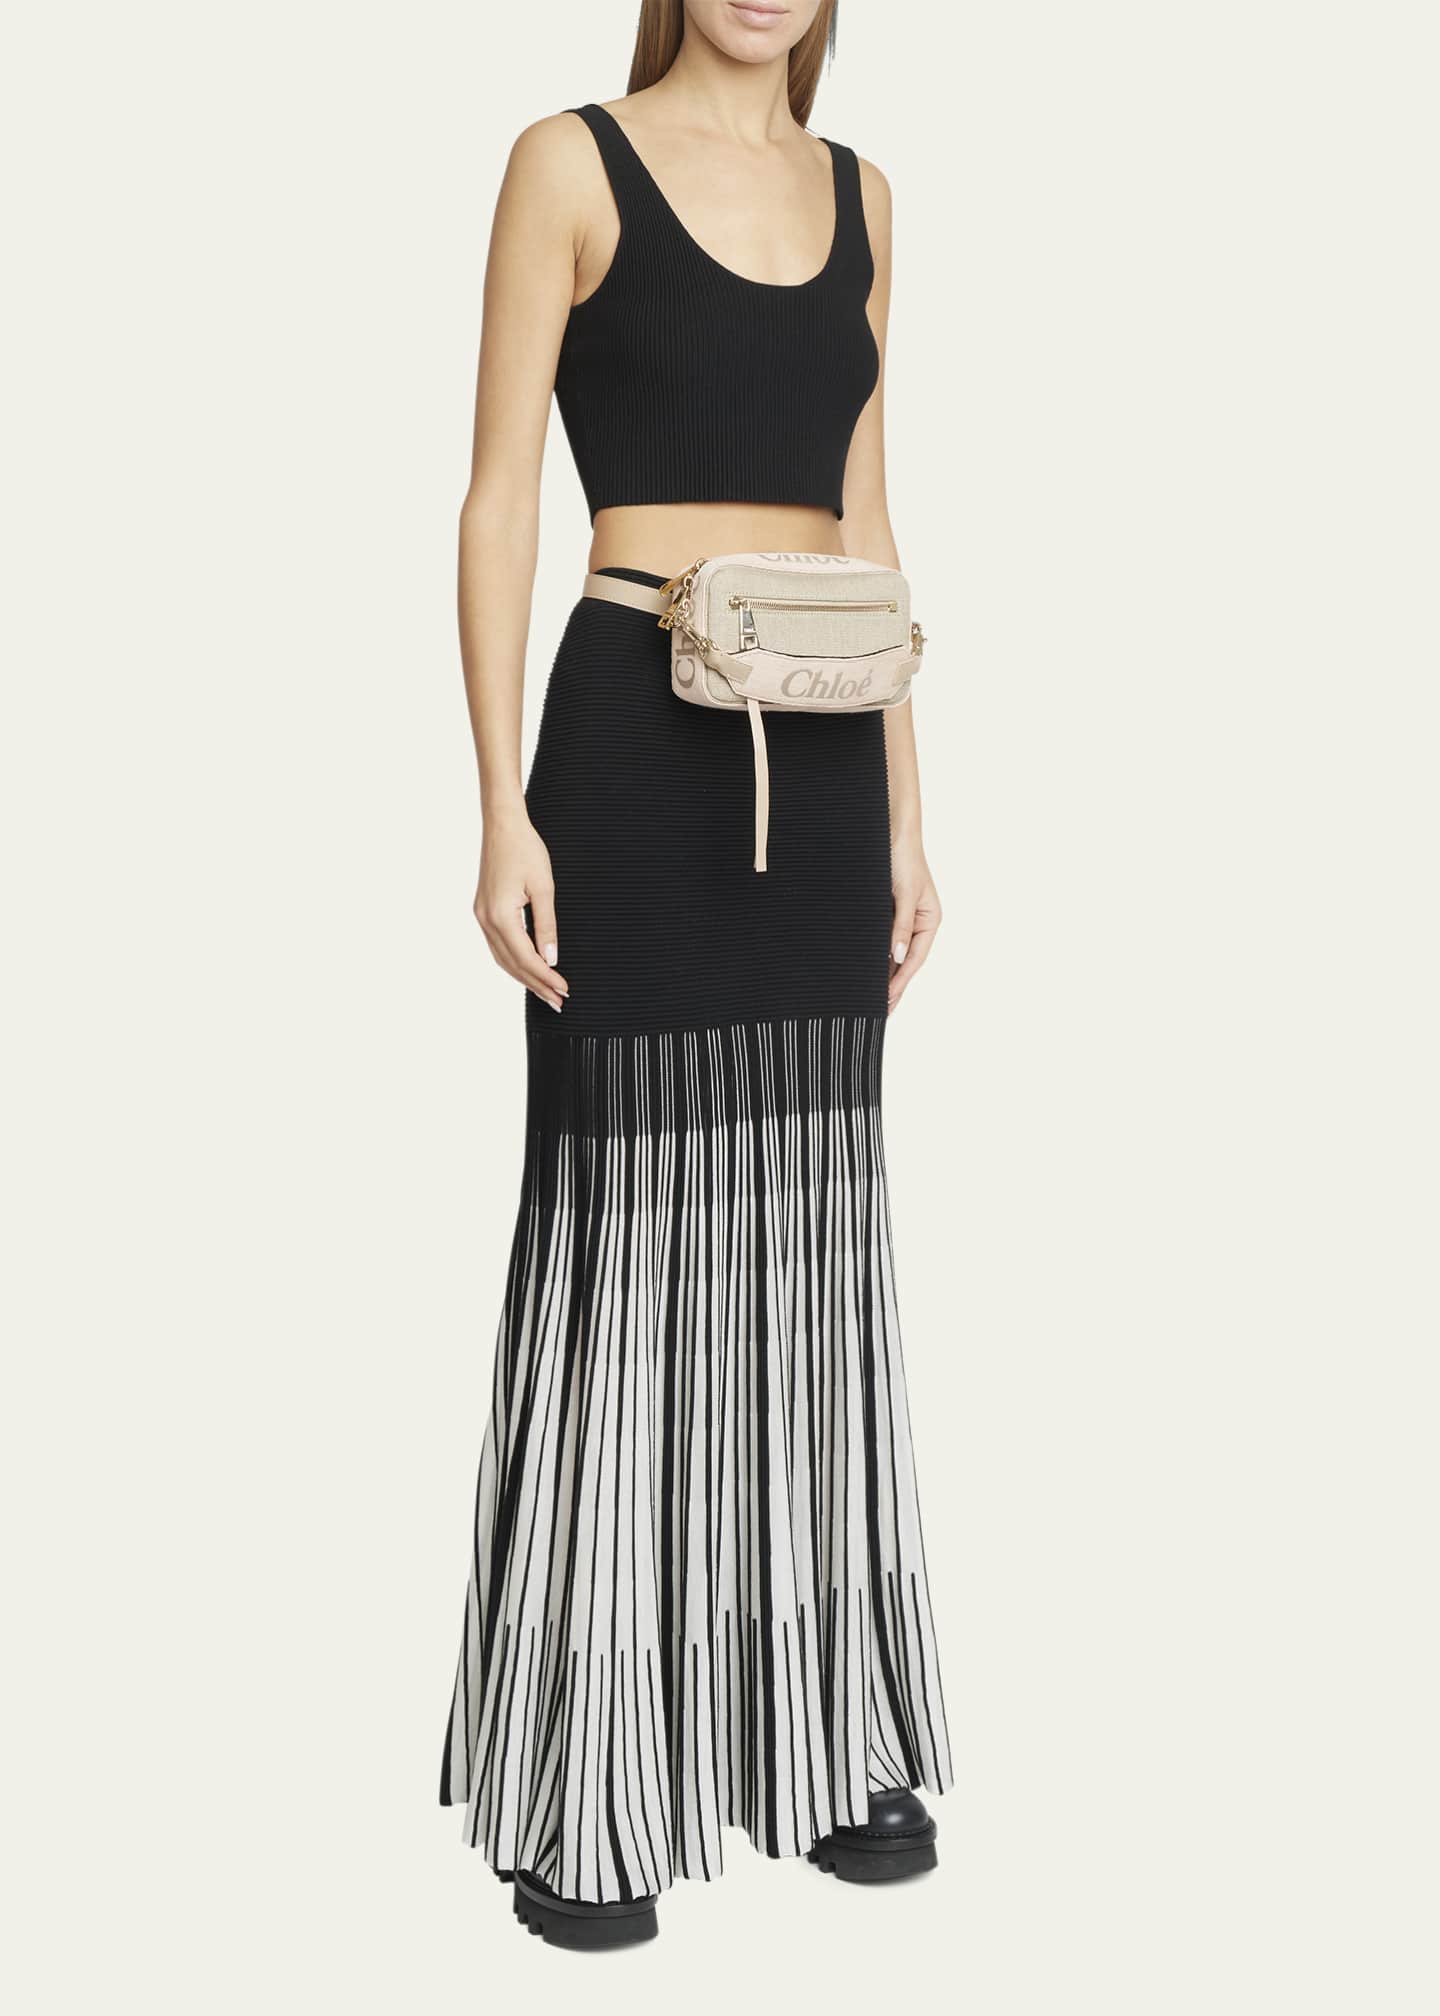 Chloe Woody Belt Bag in Linen - Bergdorf Goodman